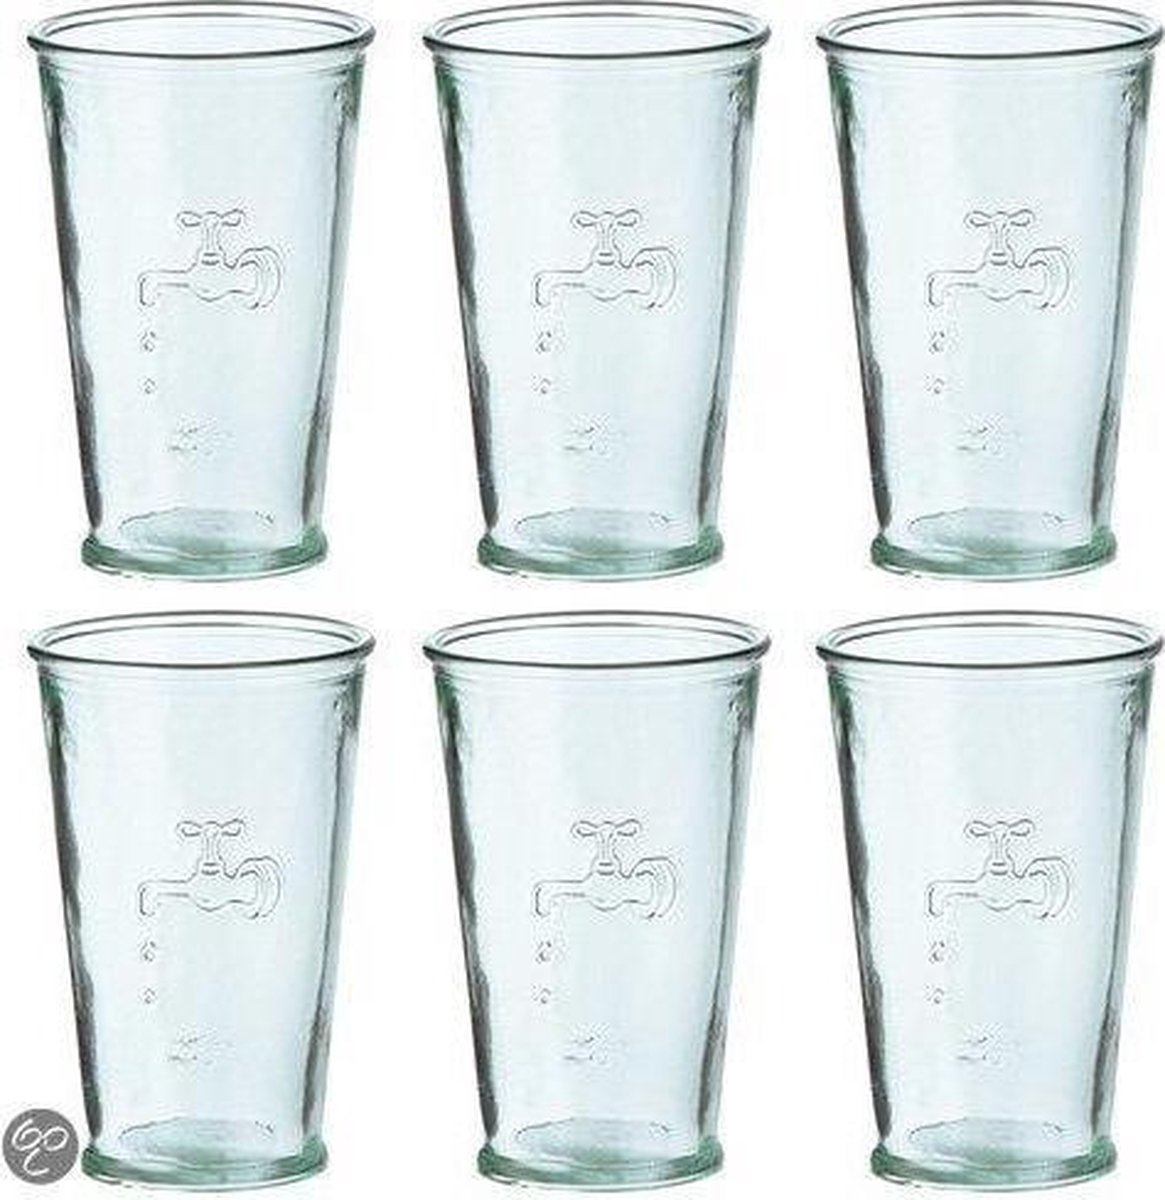 Jamie Oliver Waterglazen - 6 stuks - Recycled glas | bol.com